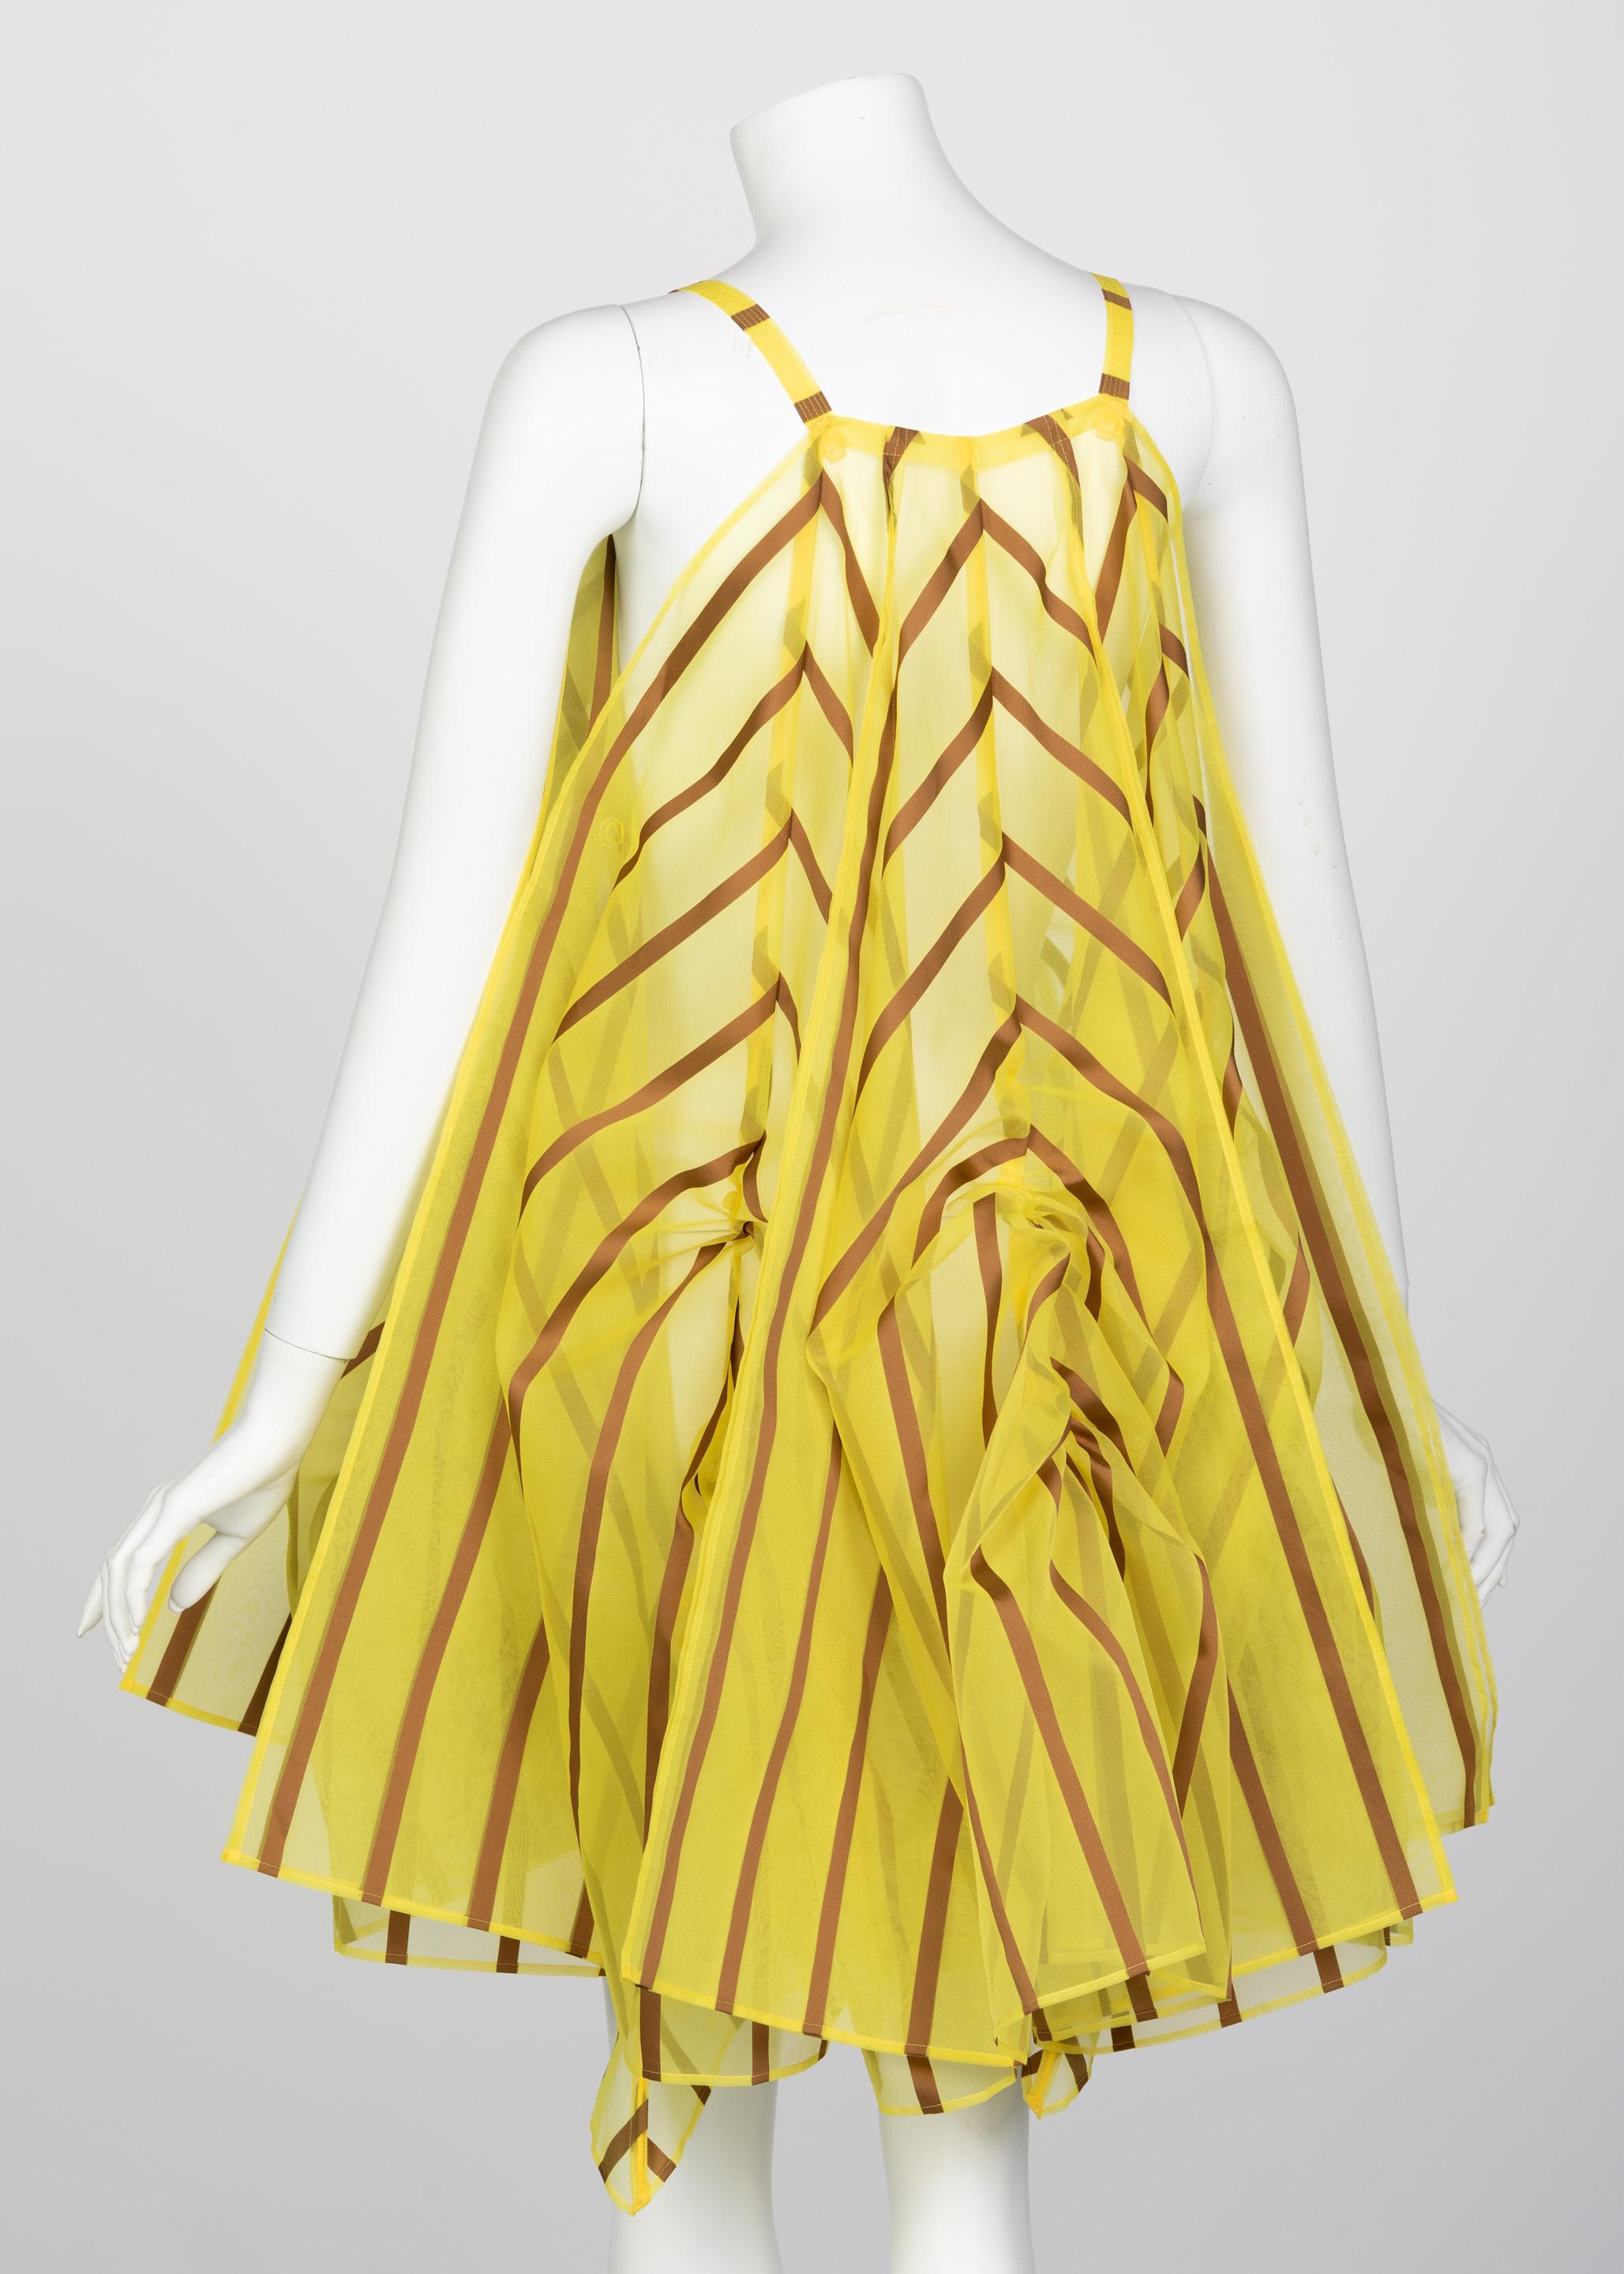 Issey Miyake Yellow Organza Brown Striped Handkerchief Dress 2